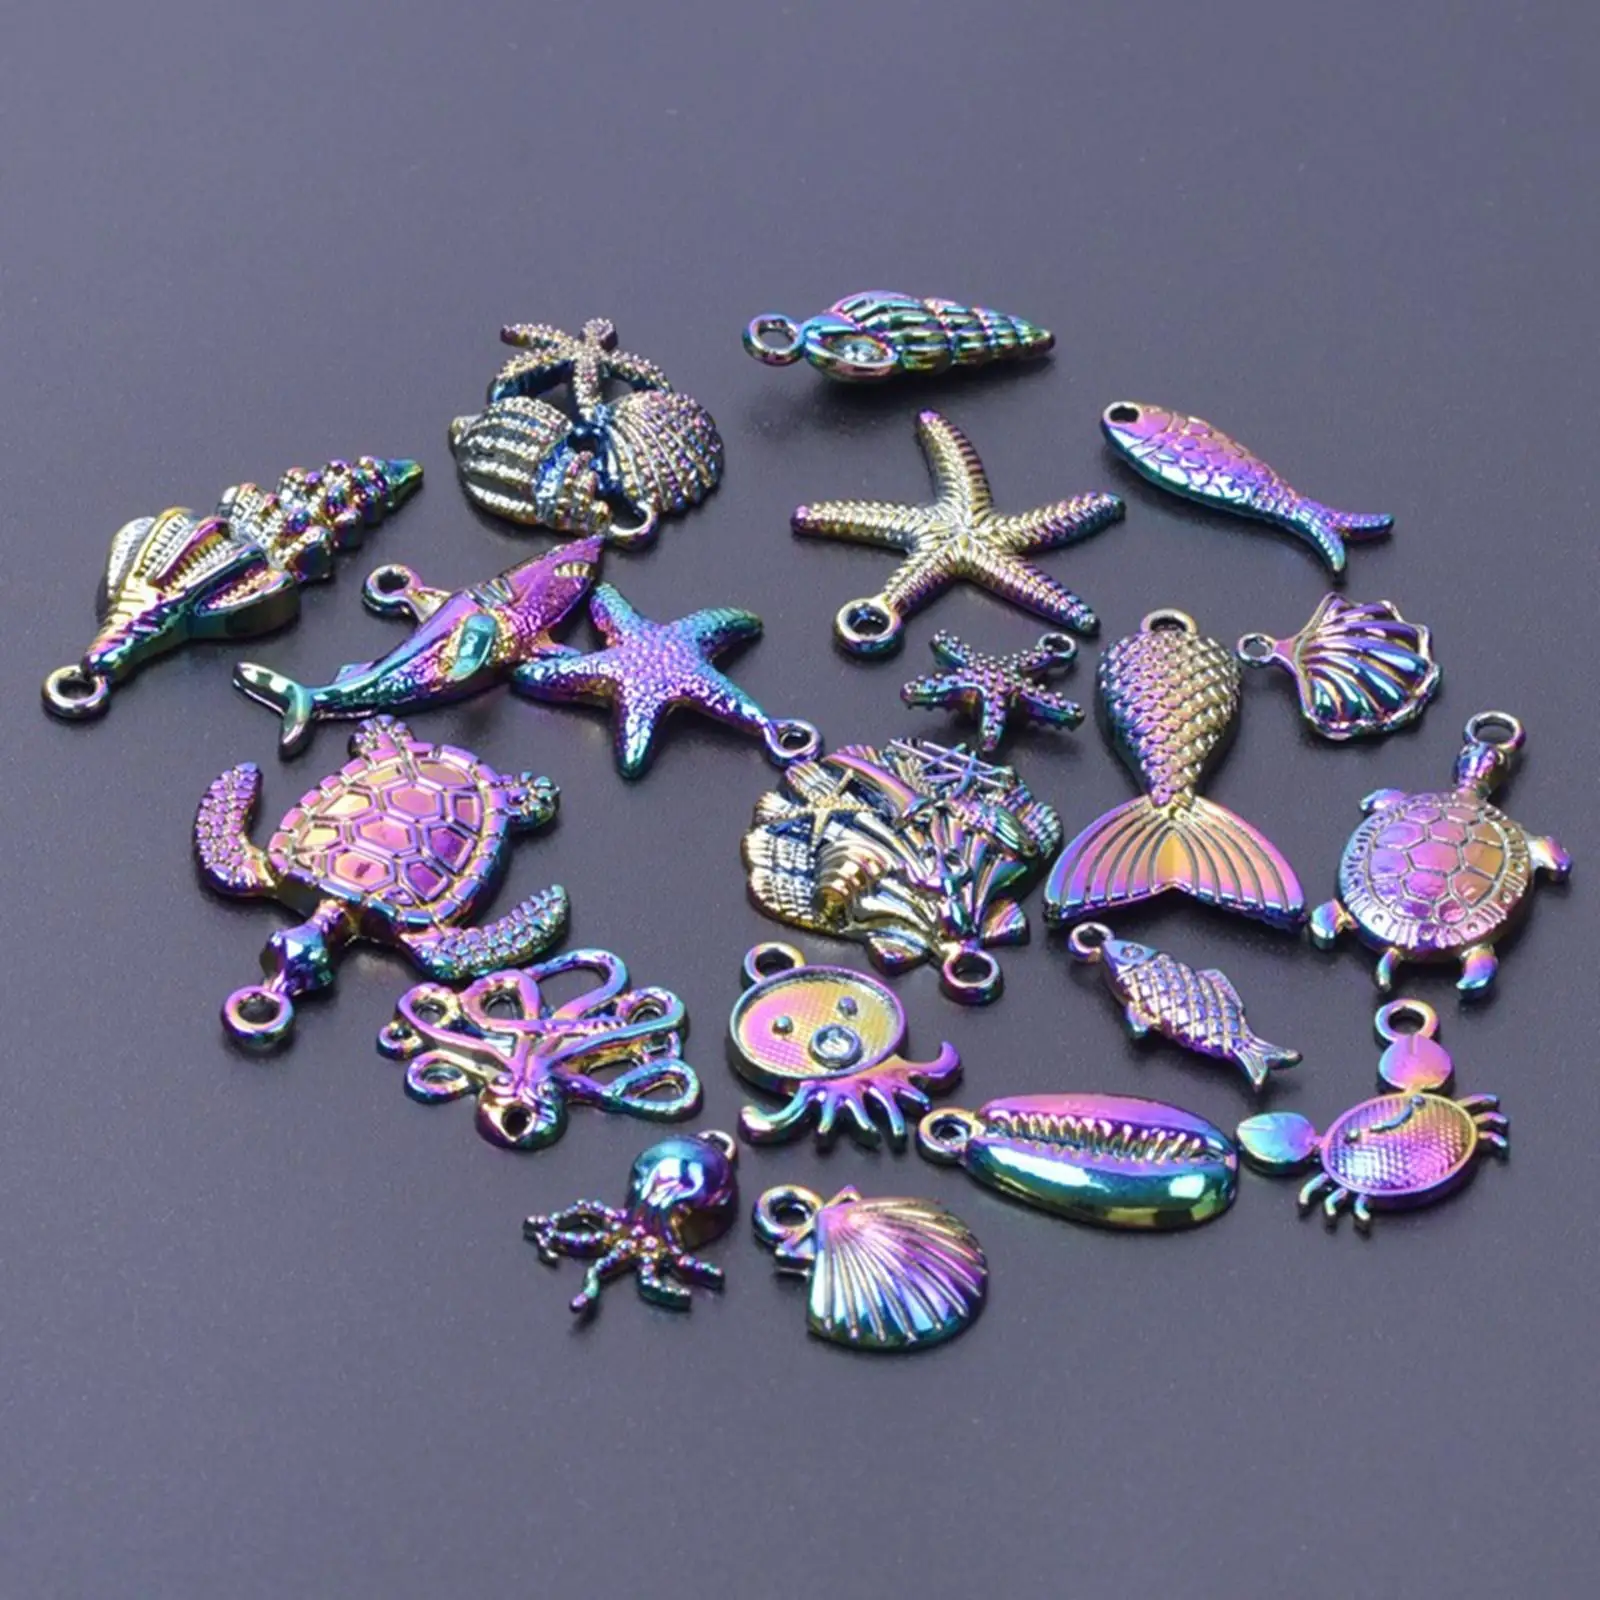 20x Ocean Charms Pendants Ornaments Fish Starfish Shell Mixed DIY Pendants for DIY Jewelry Making Bracelet Decoration Earrings